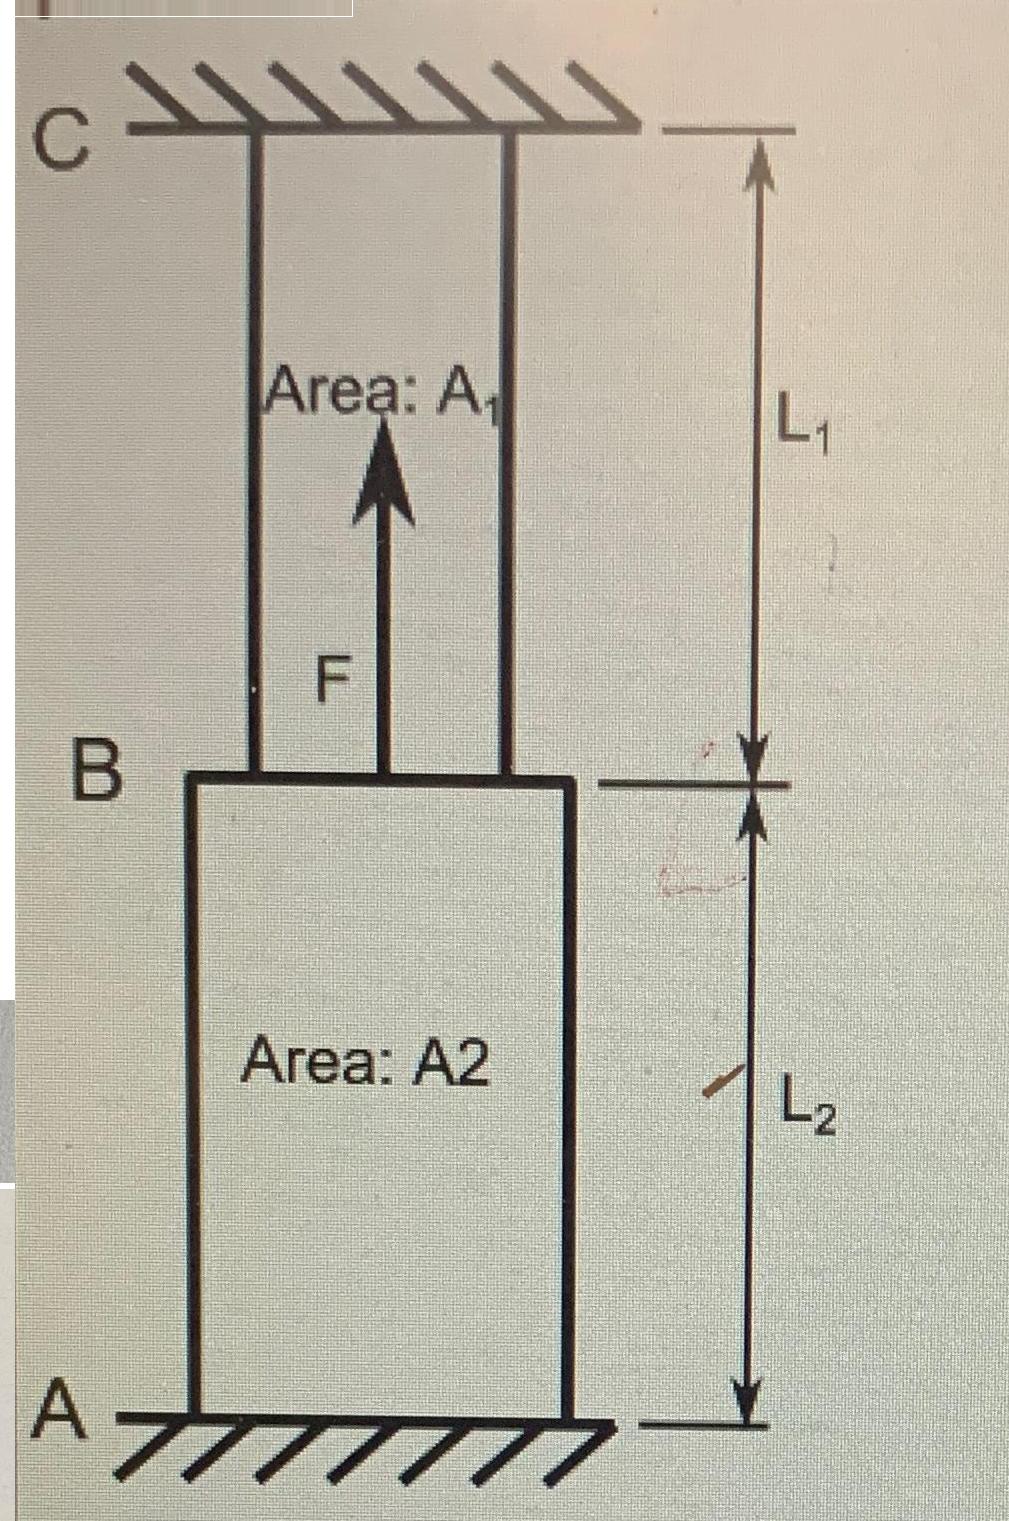 C B A Area: A F Area: A2 TIITTI L L2